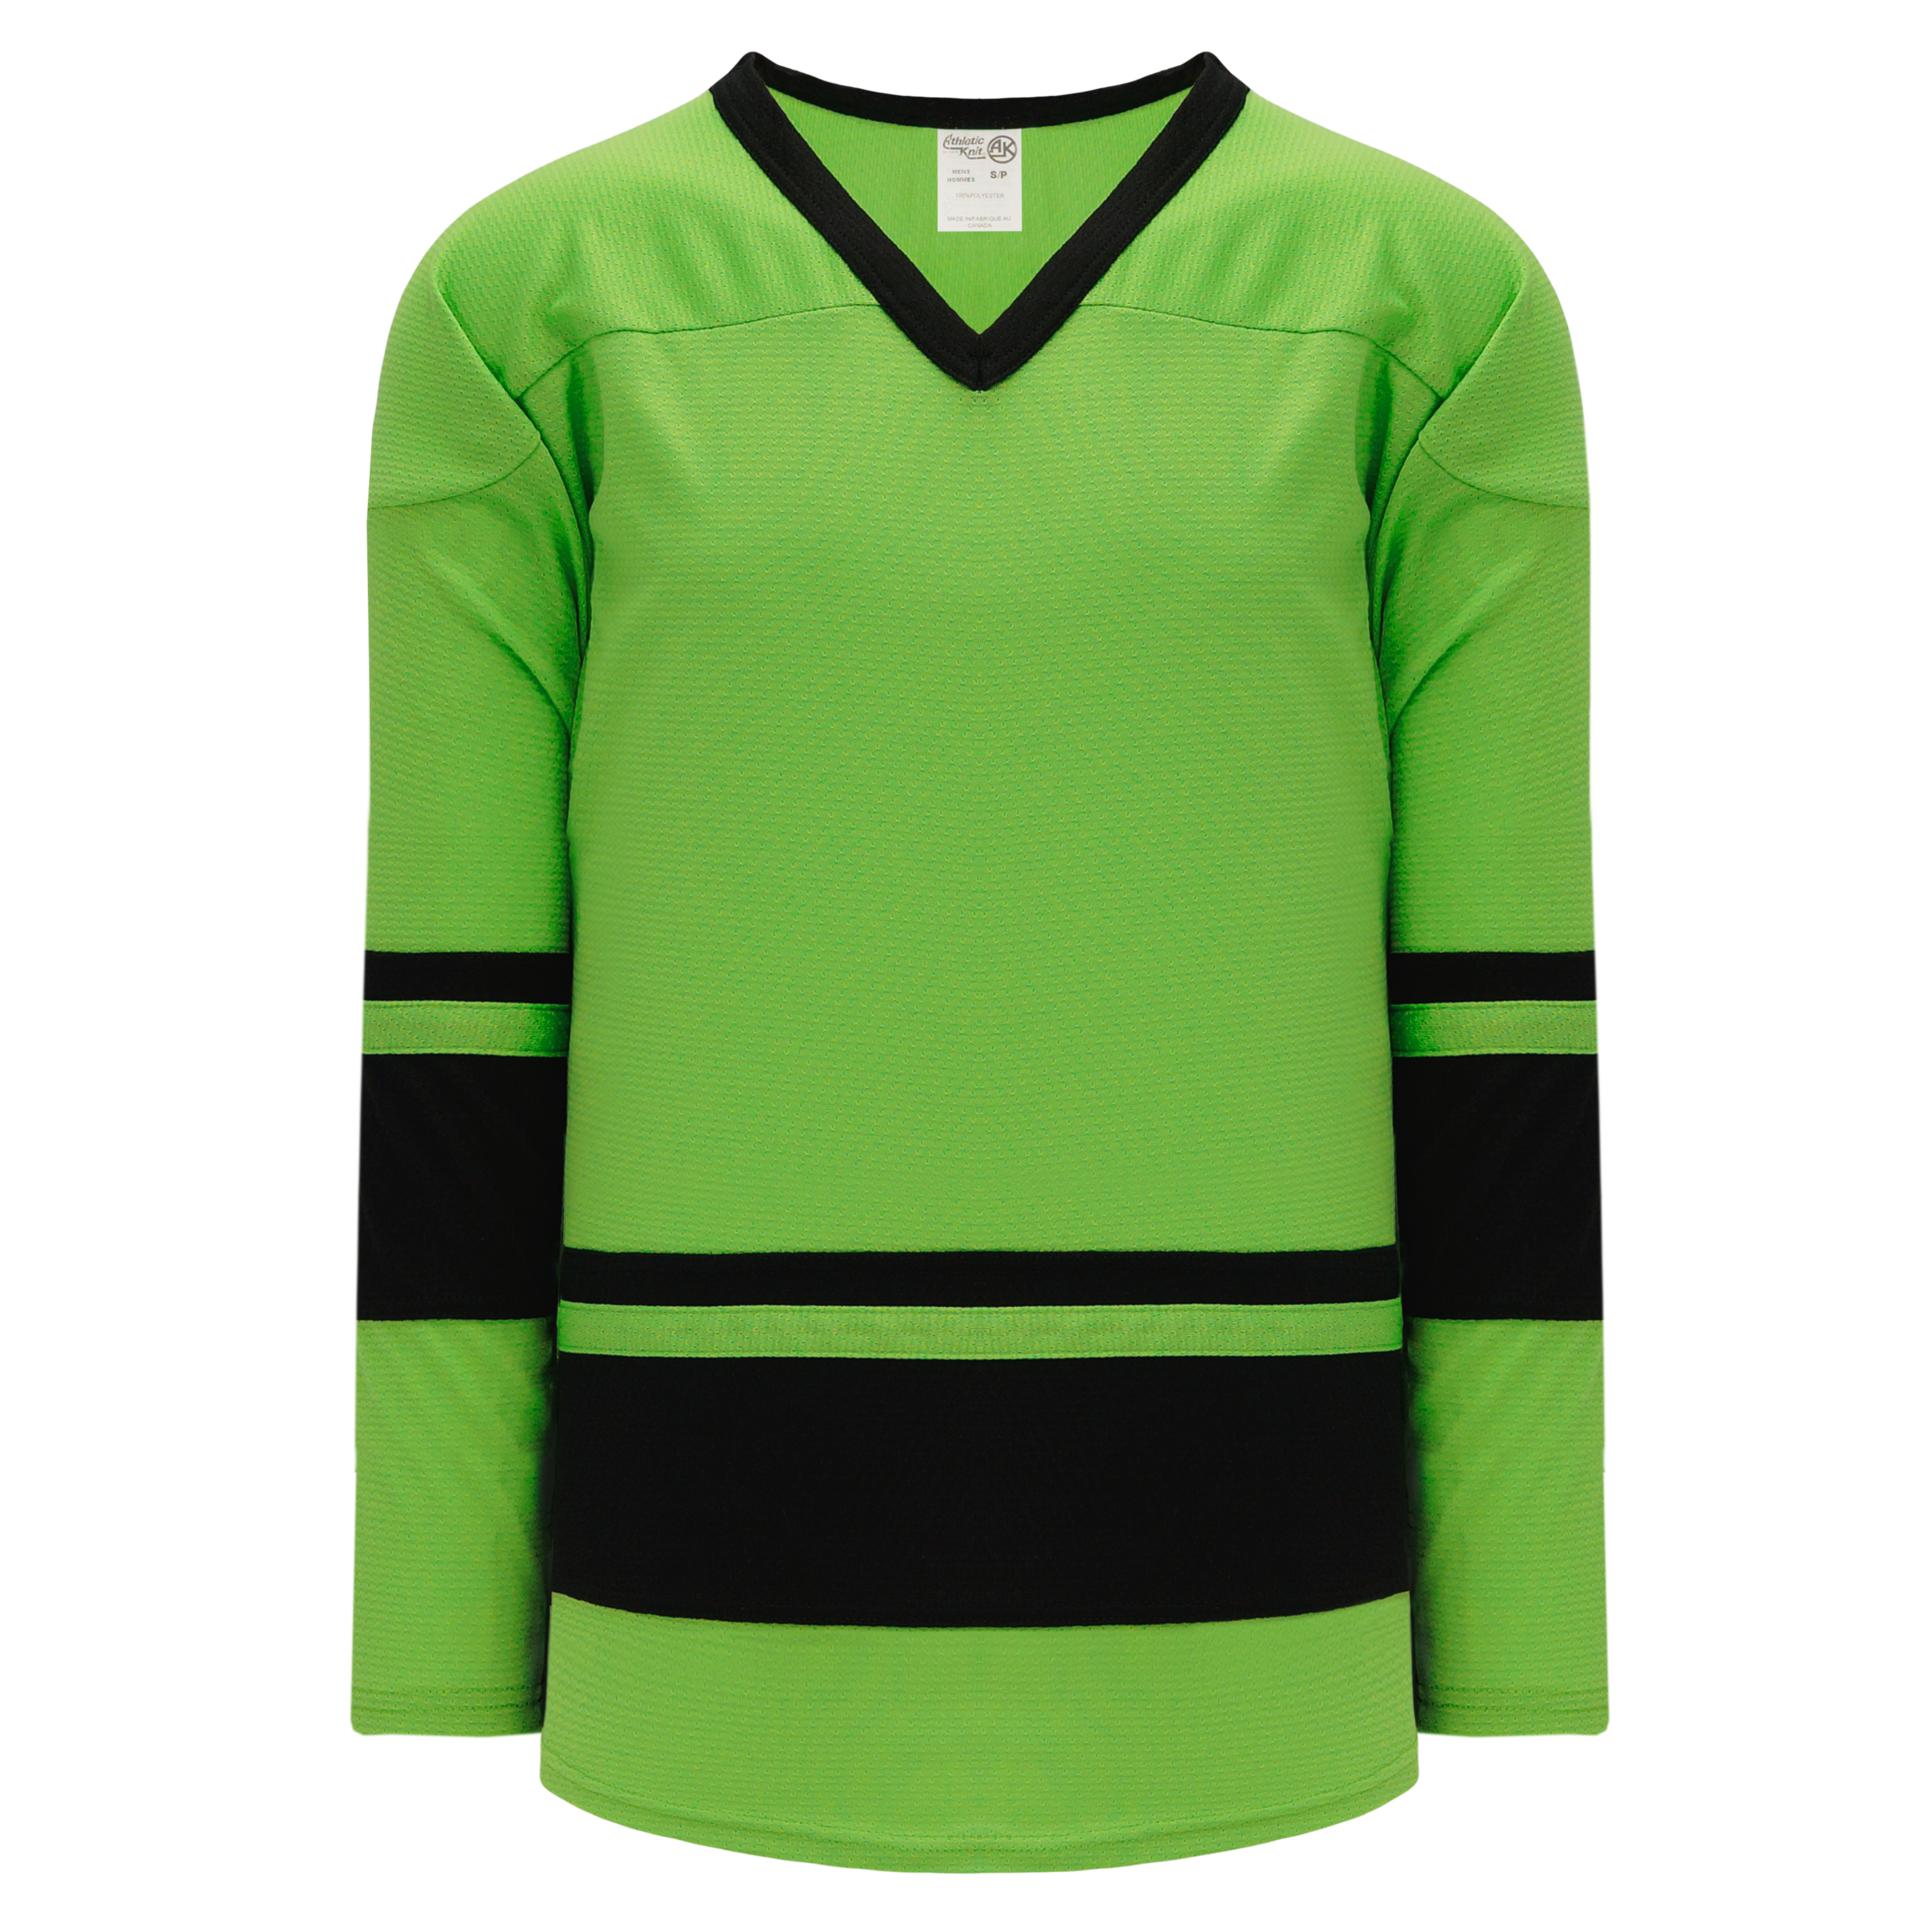 H6400-269 Lime Green/Black Blank League Jerseys